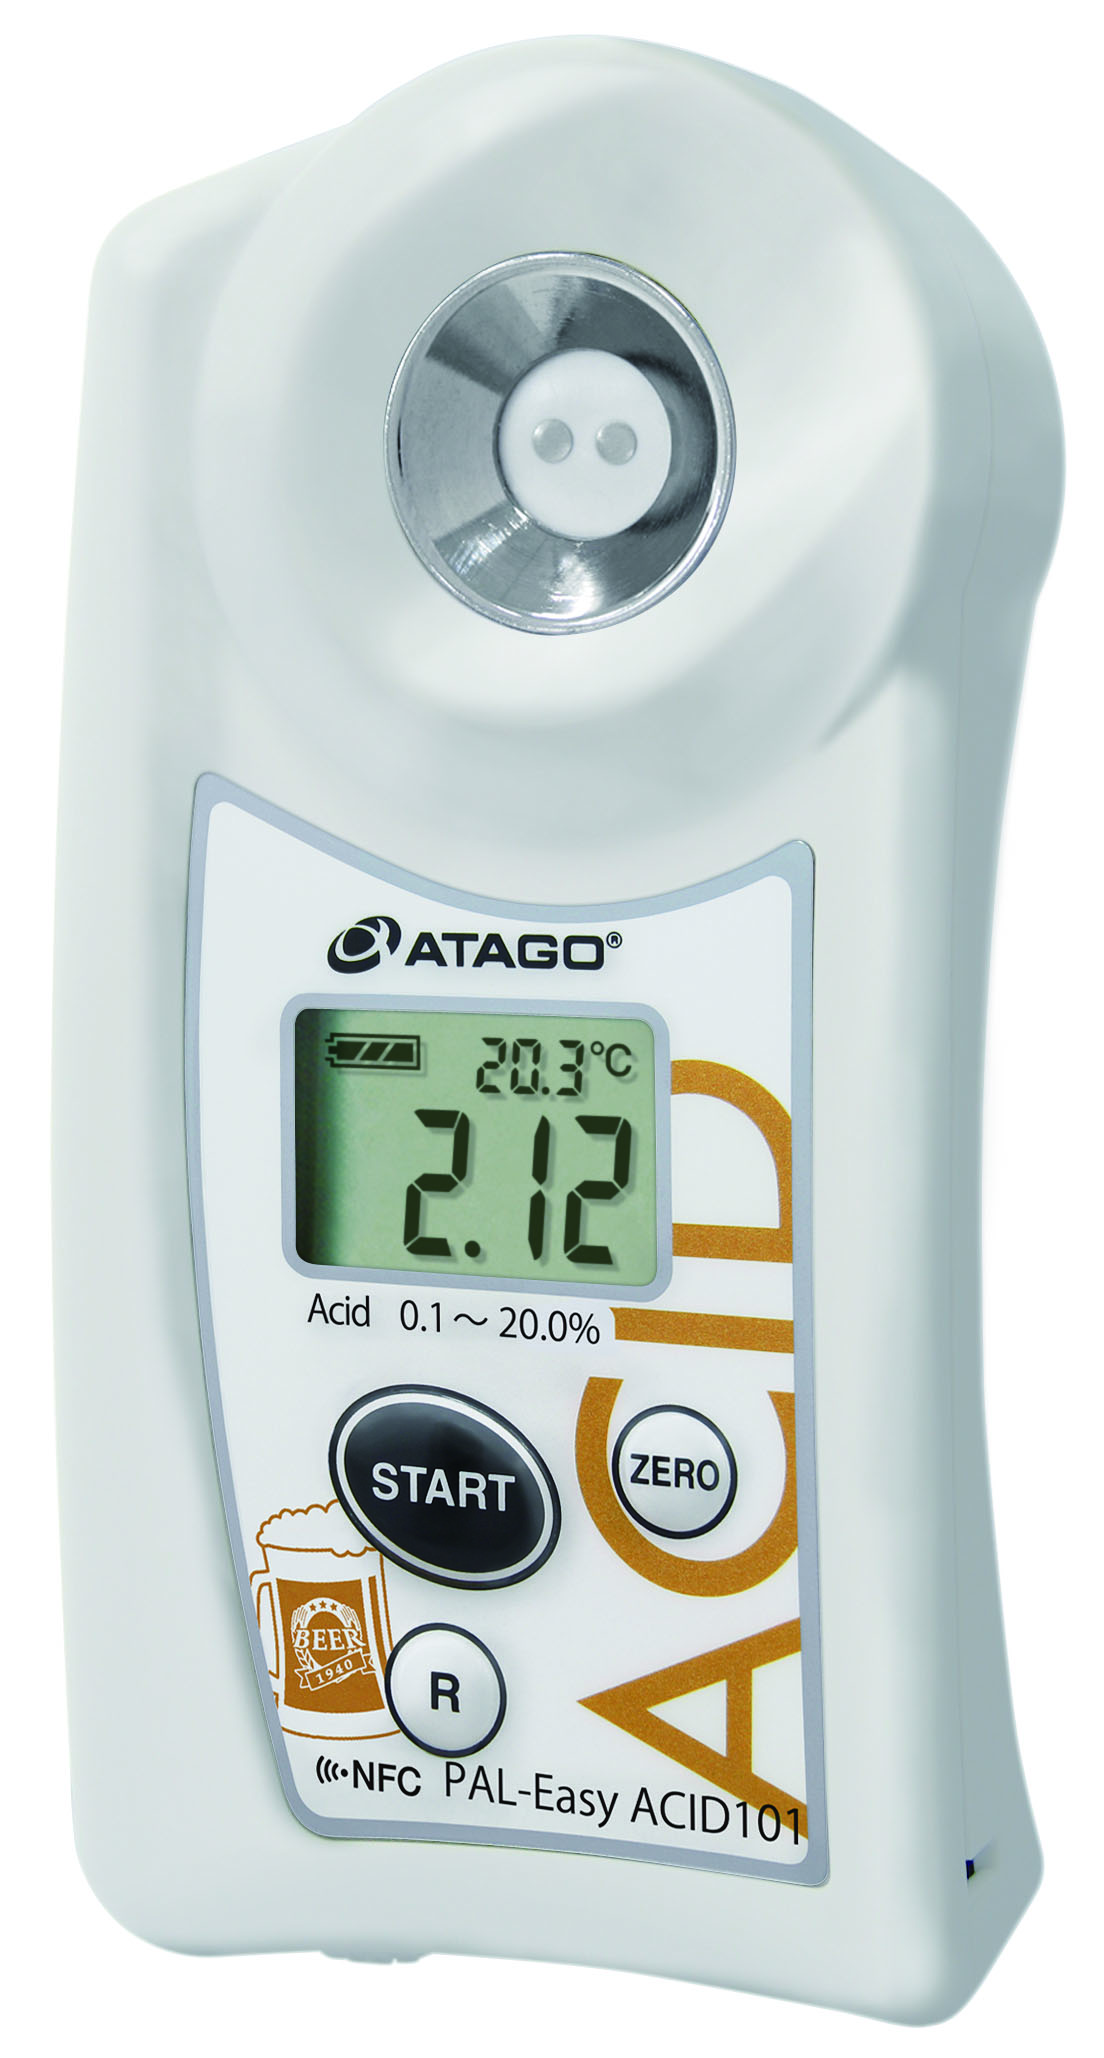 Atago 7701 Pocket Acidity Meter PAL-Easy ACID101 Master Kit for Beer, Acid : 0.10 to 20.00％ Measurement Range